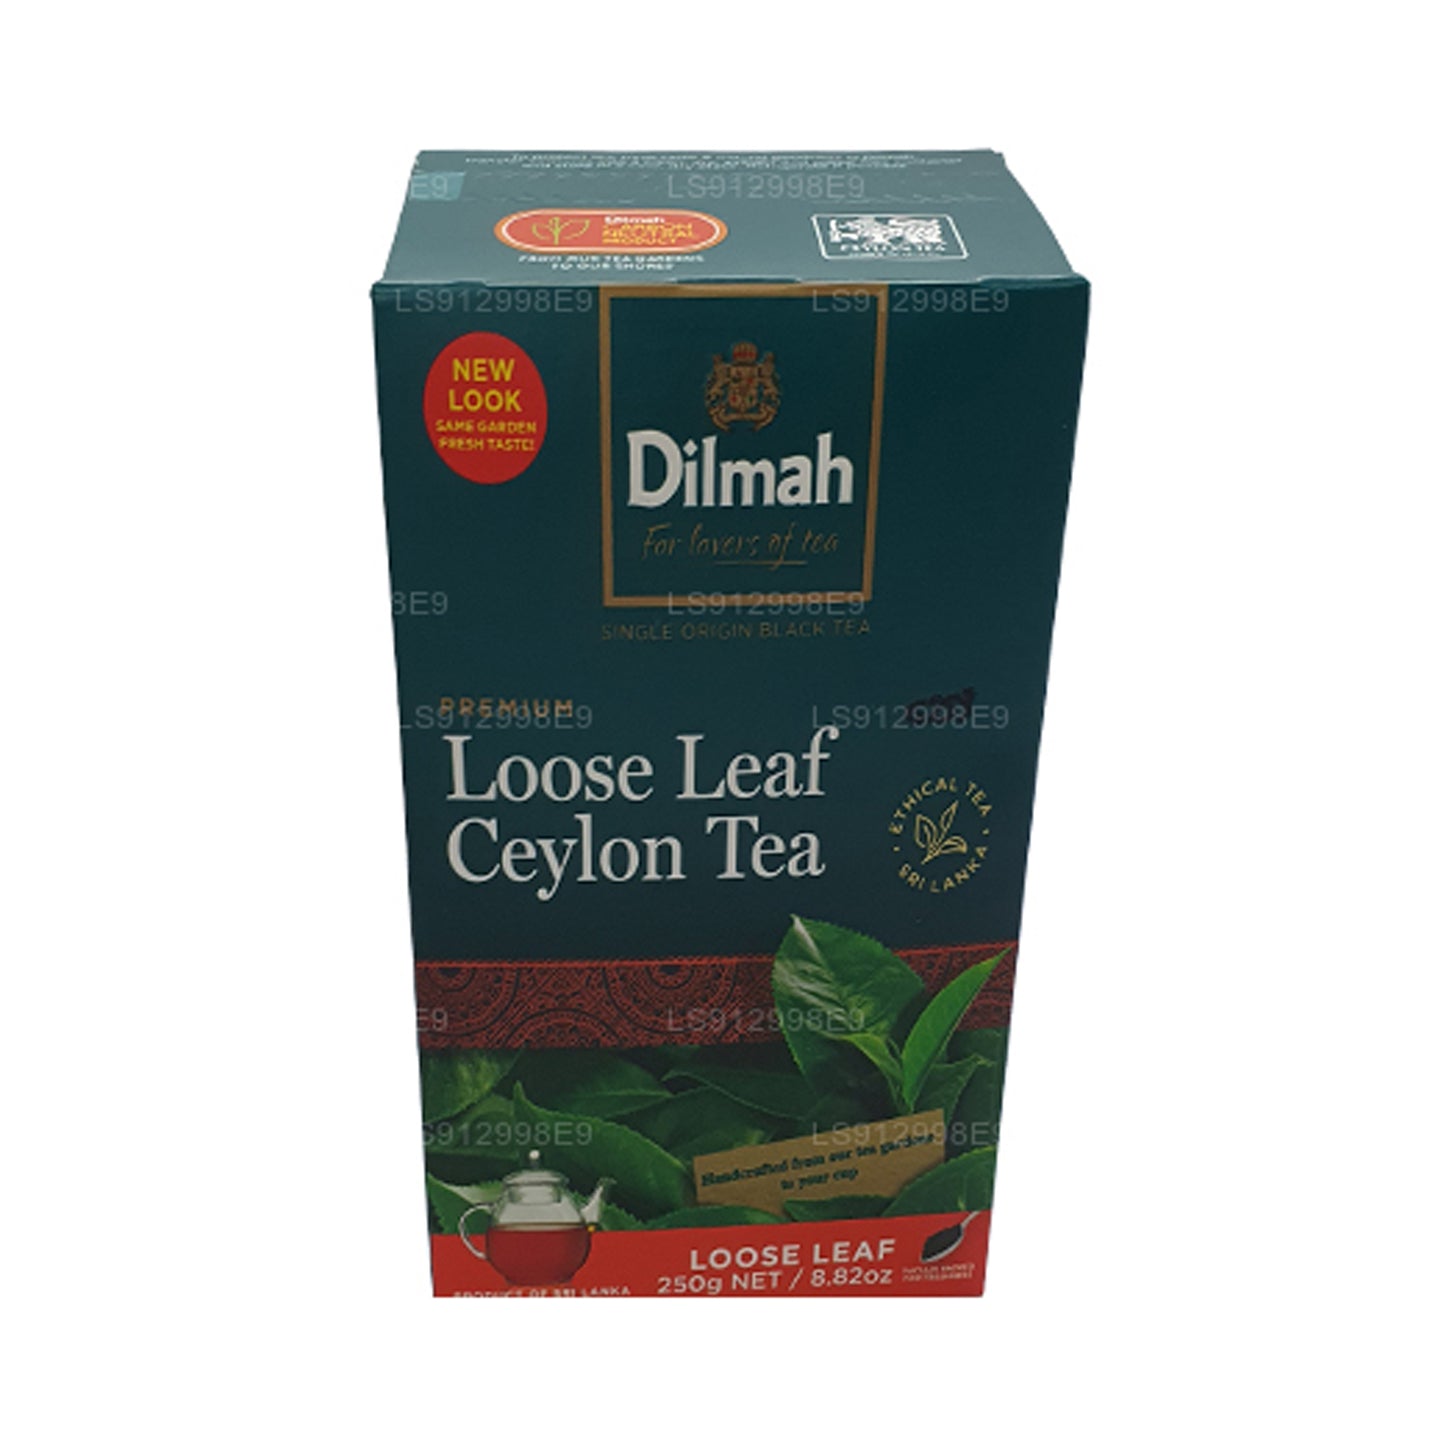 Dilmah Premium Ceylon Loose Leaf Tea